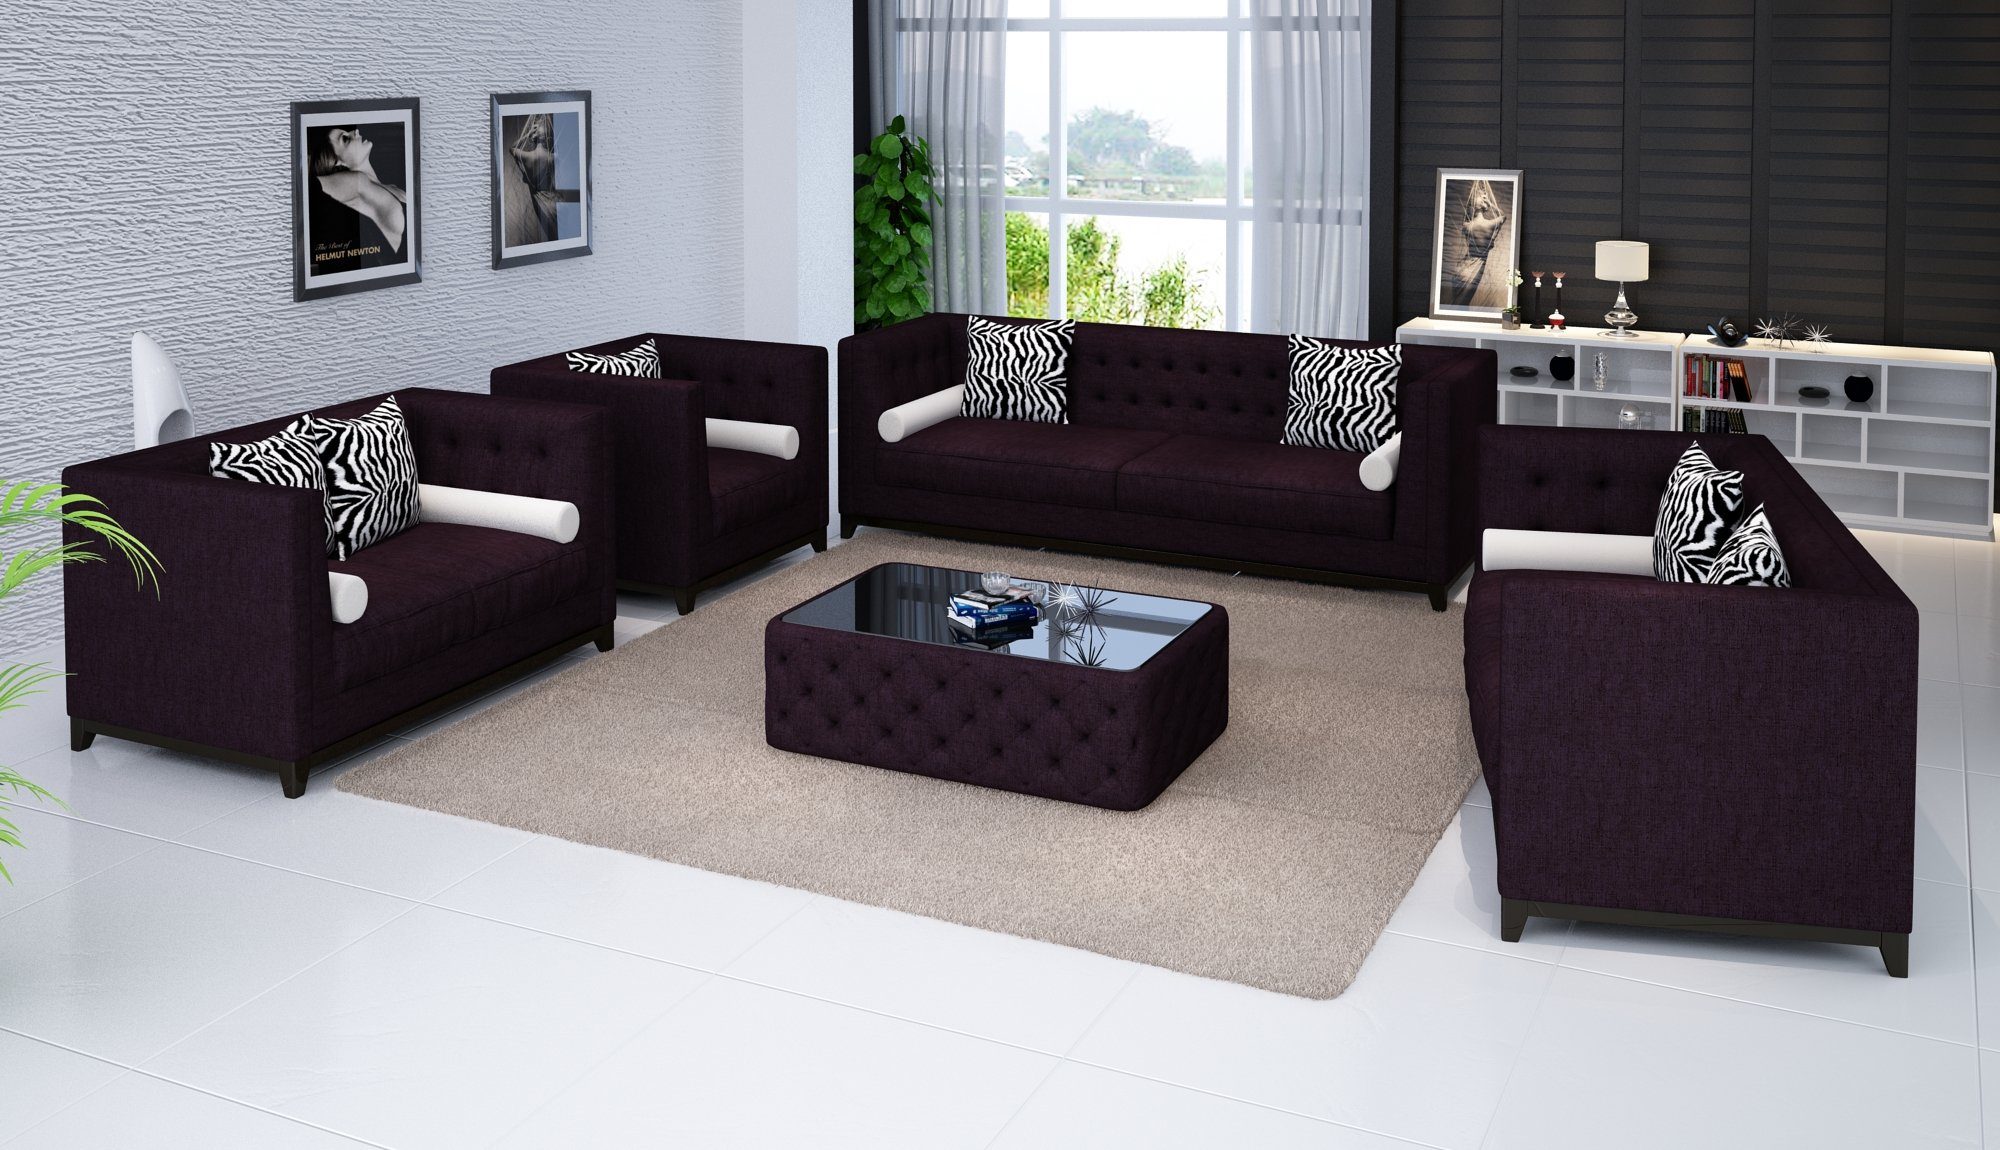 JVmoebel Sofa Sofagarnitur Set Design Sofas Polster Couchen Leder 3 2 Sitzer, Made in Europe Lila